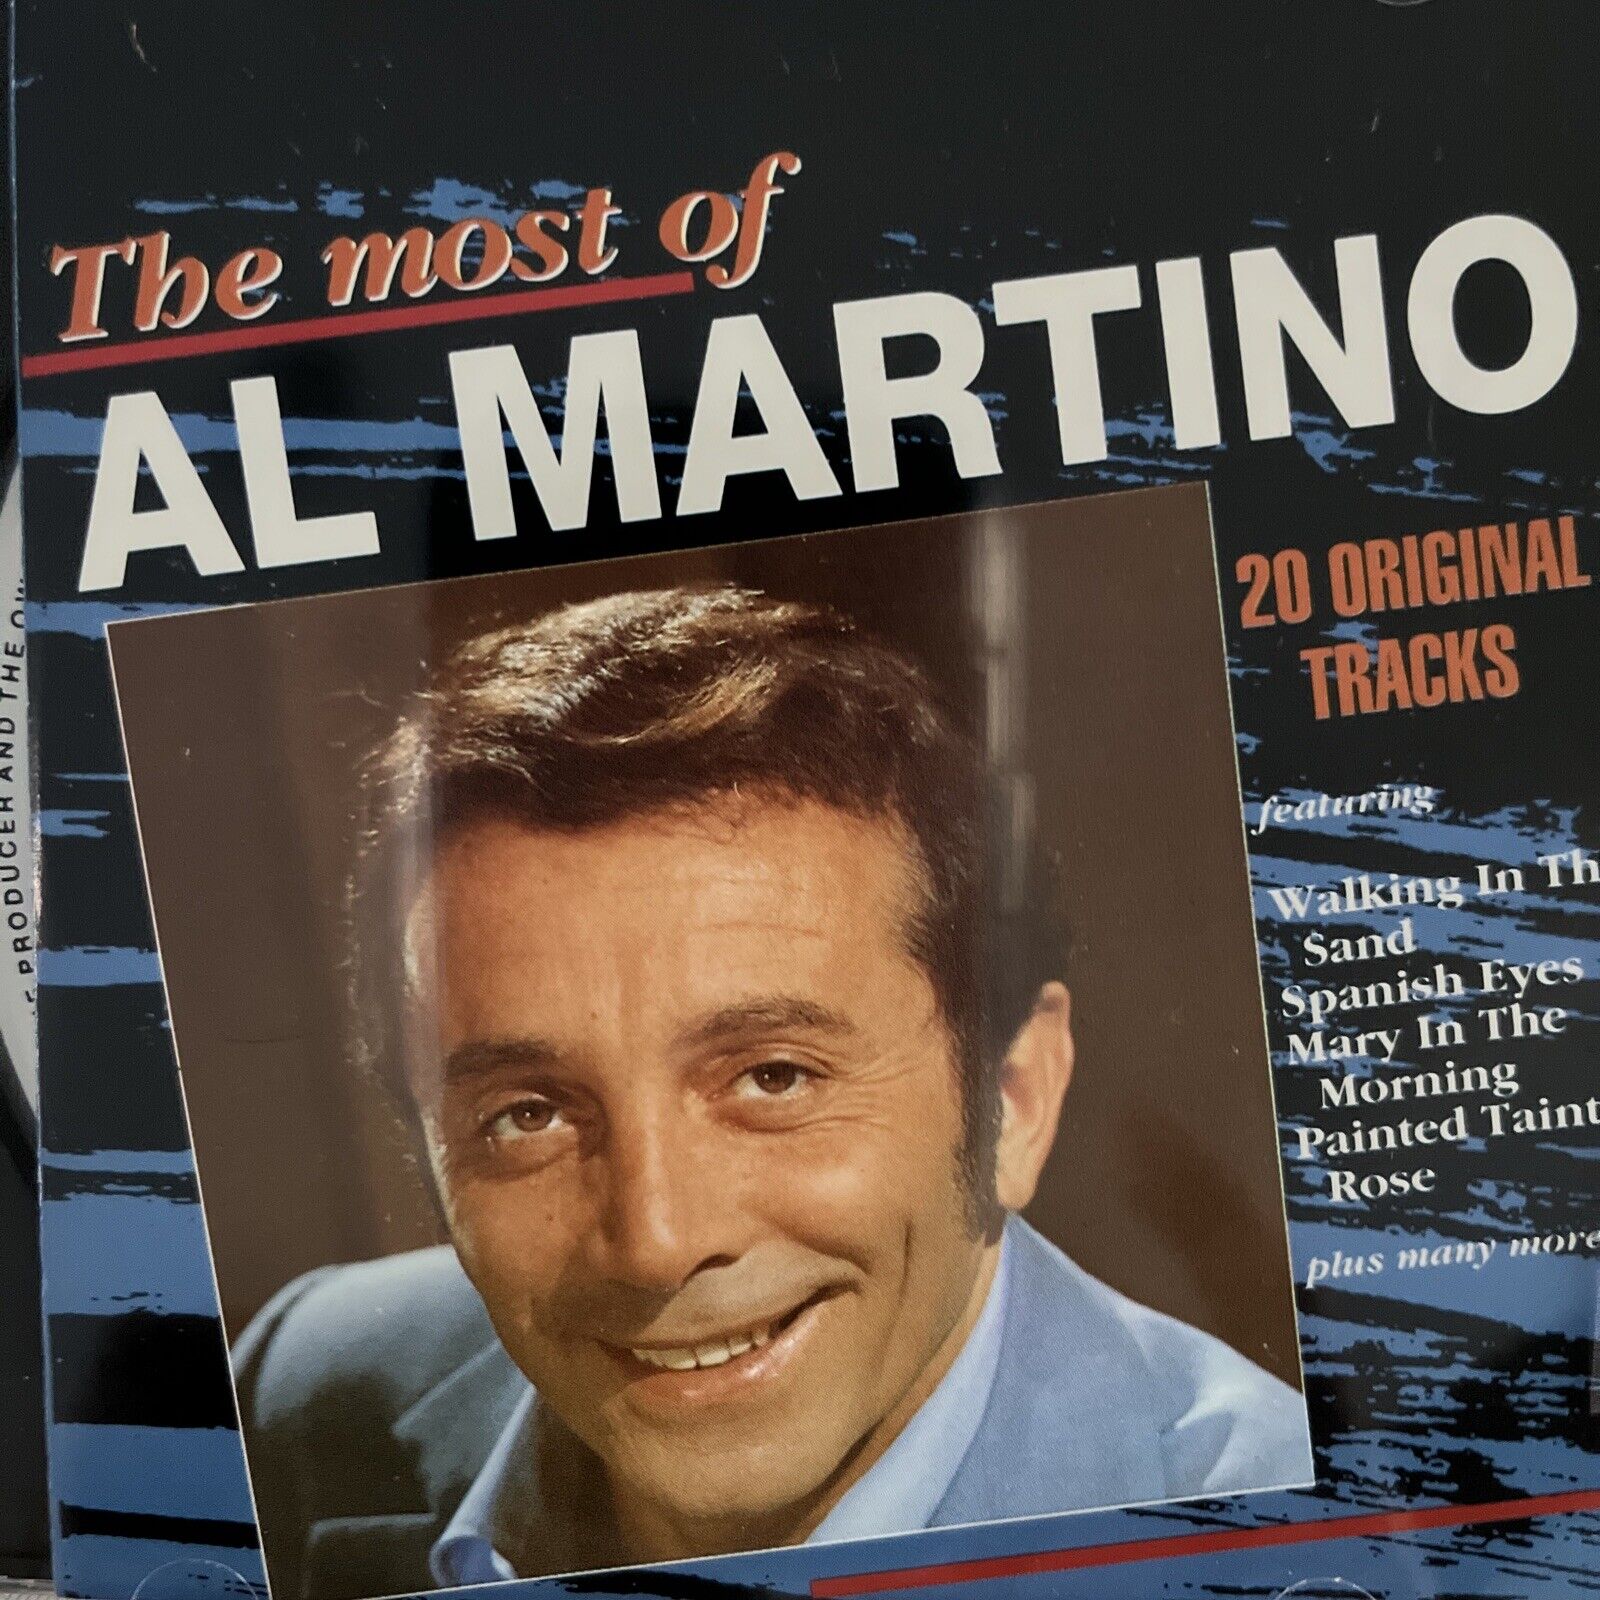 The most of AL MARTINO cd Australian Import